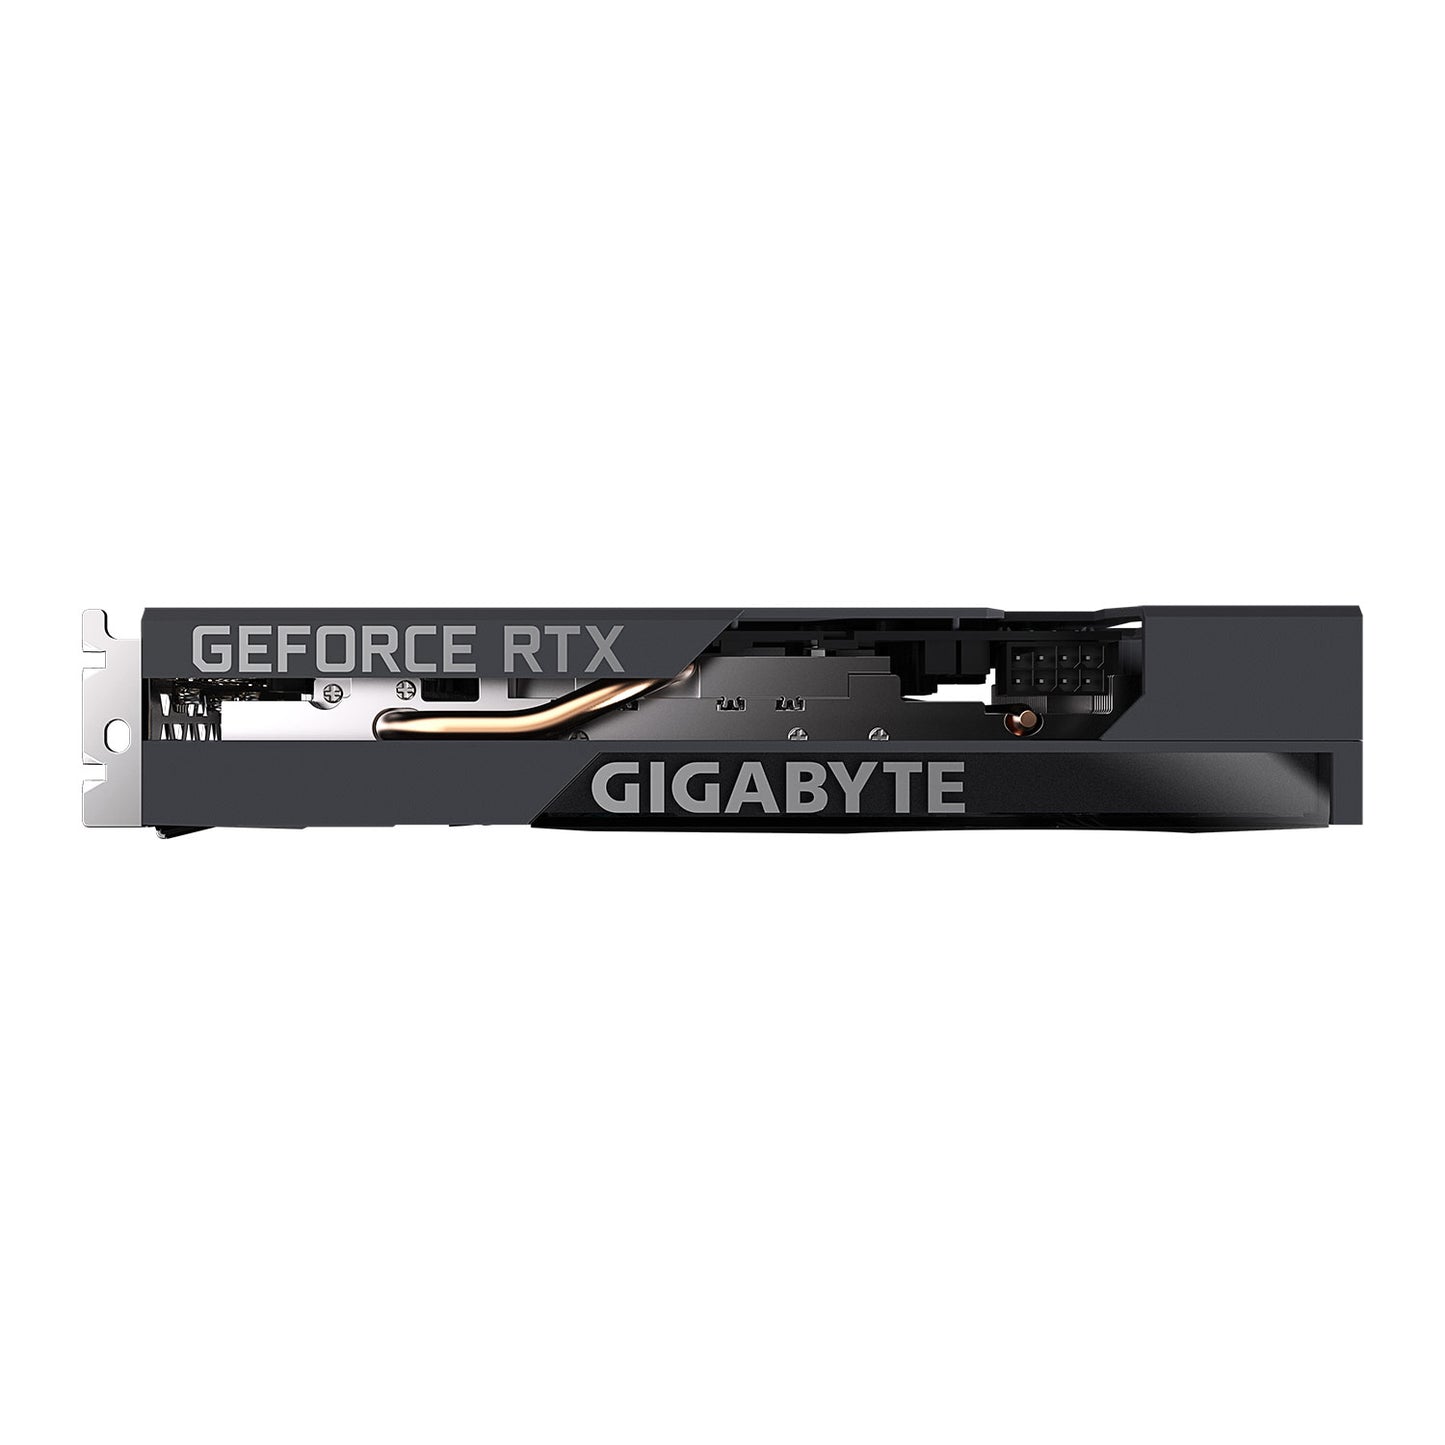 Gigabyte NVIDIA GeForce RTX 3050 8GB EAGLE Ampere PC Graphics Card GPU